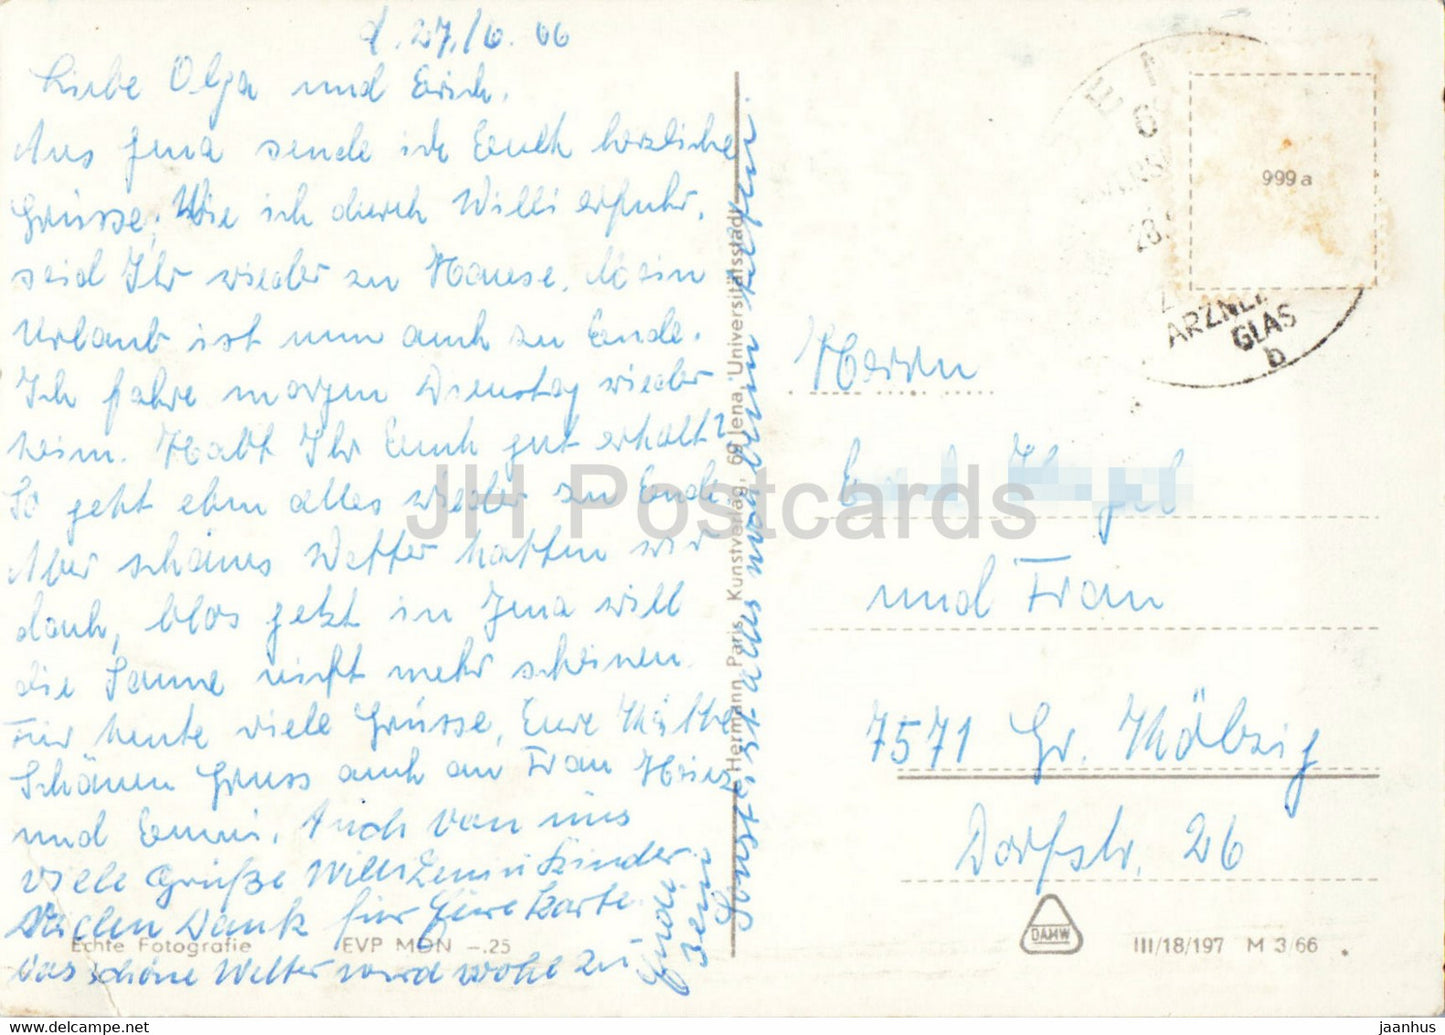 Jena - Blick vom Hotel International - Zeiss Planetariom - Universitat - tram - carte postale ancienne - 1966 - Allemagne DDR - utilisé